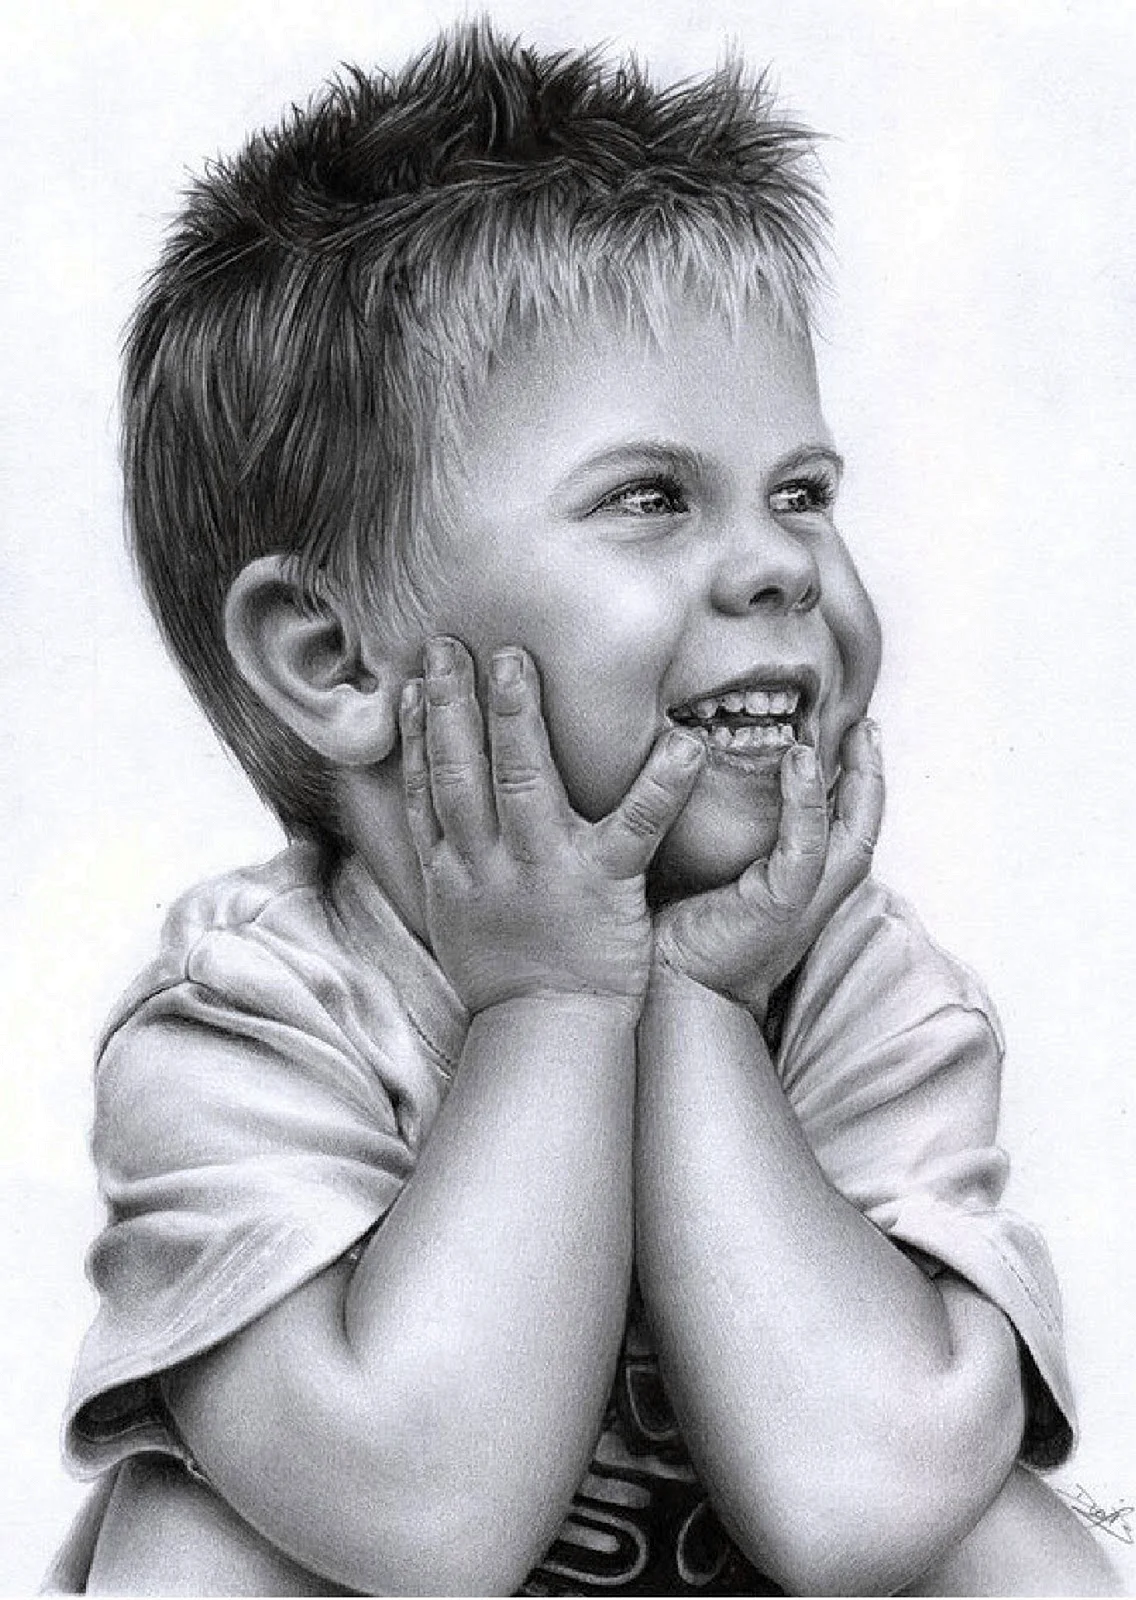 Портрет ребенка карандашом